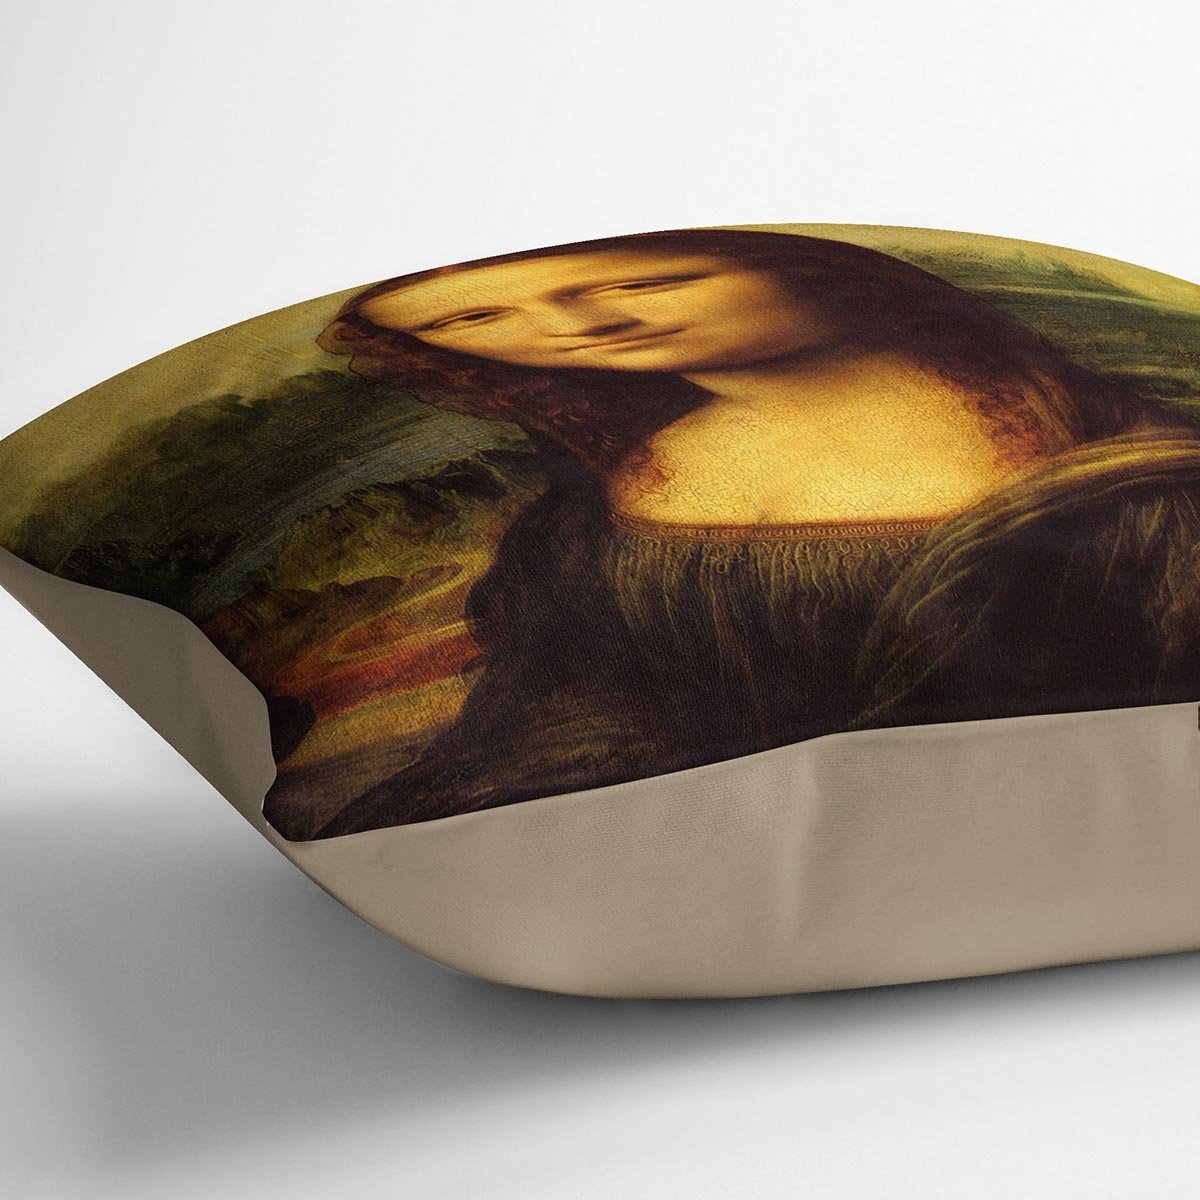 Mona Lisa by Da Vinci Throw Pillow